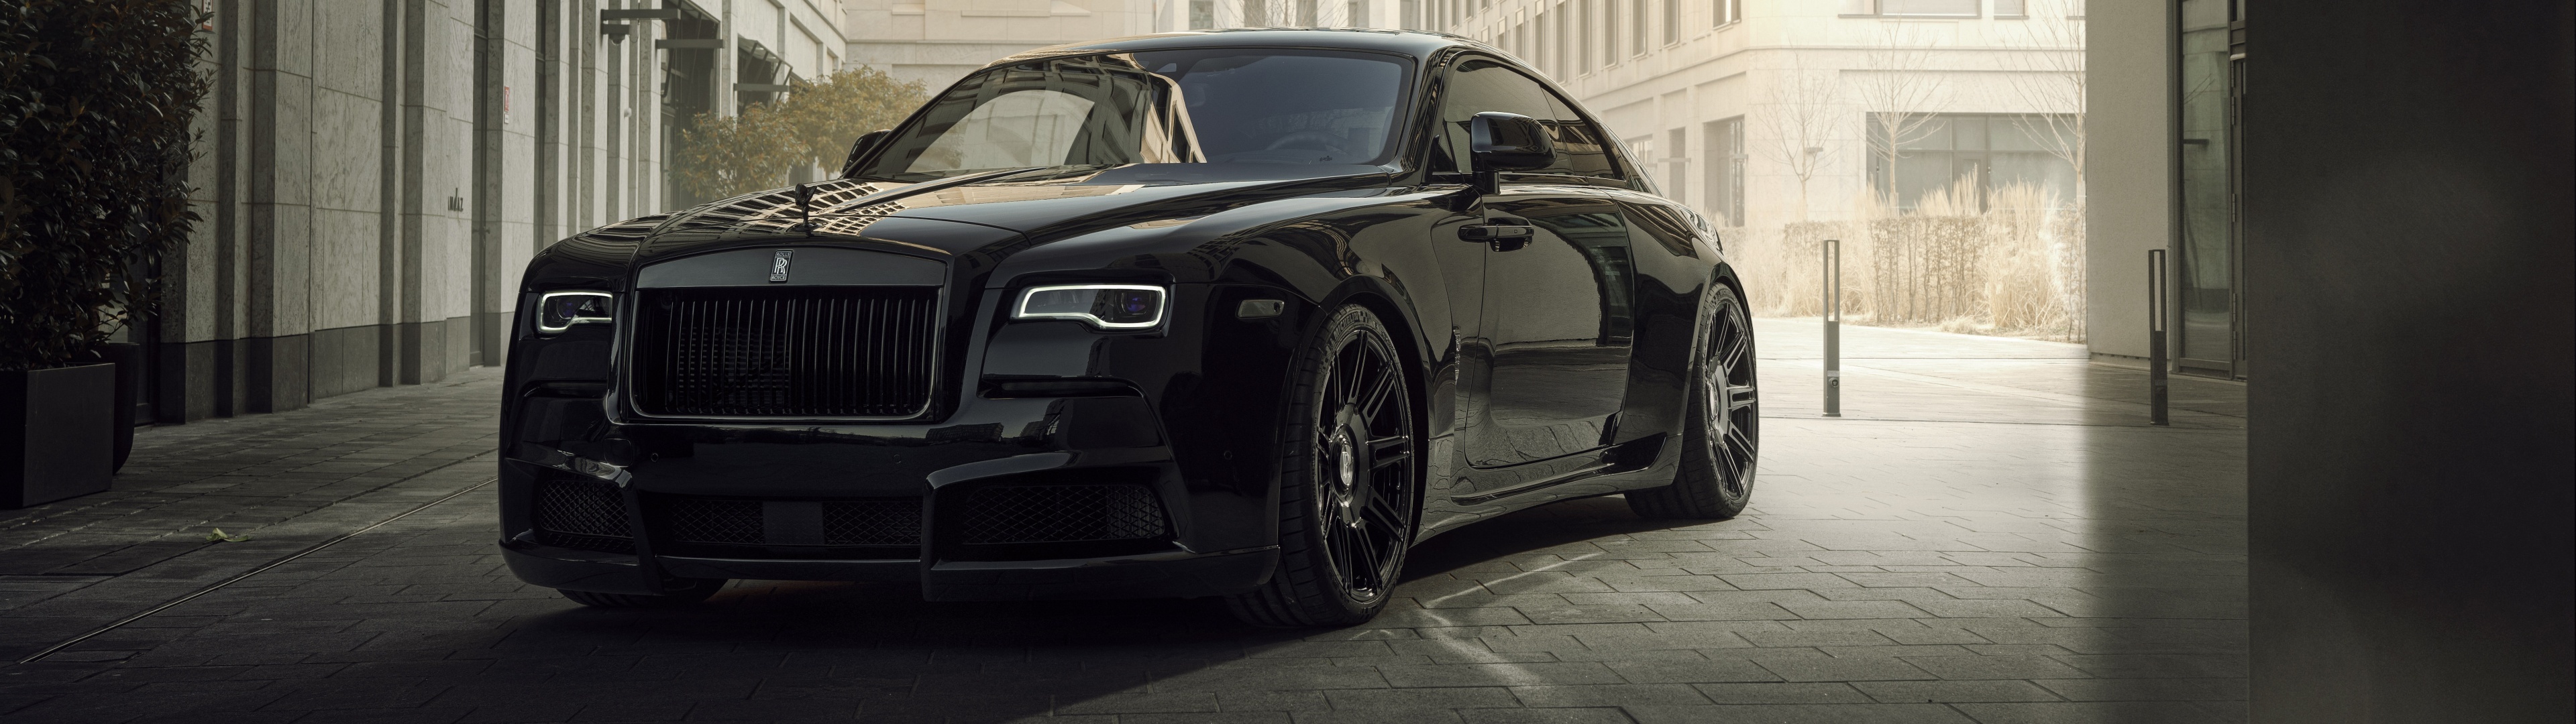 Rolls-Royce Wraith, Exclusive car, Ultimate luxury, Supreme refinement, 3840x1080 Dual Screen Desktop